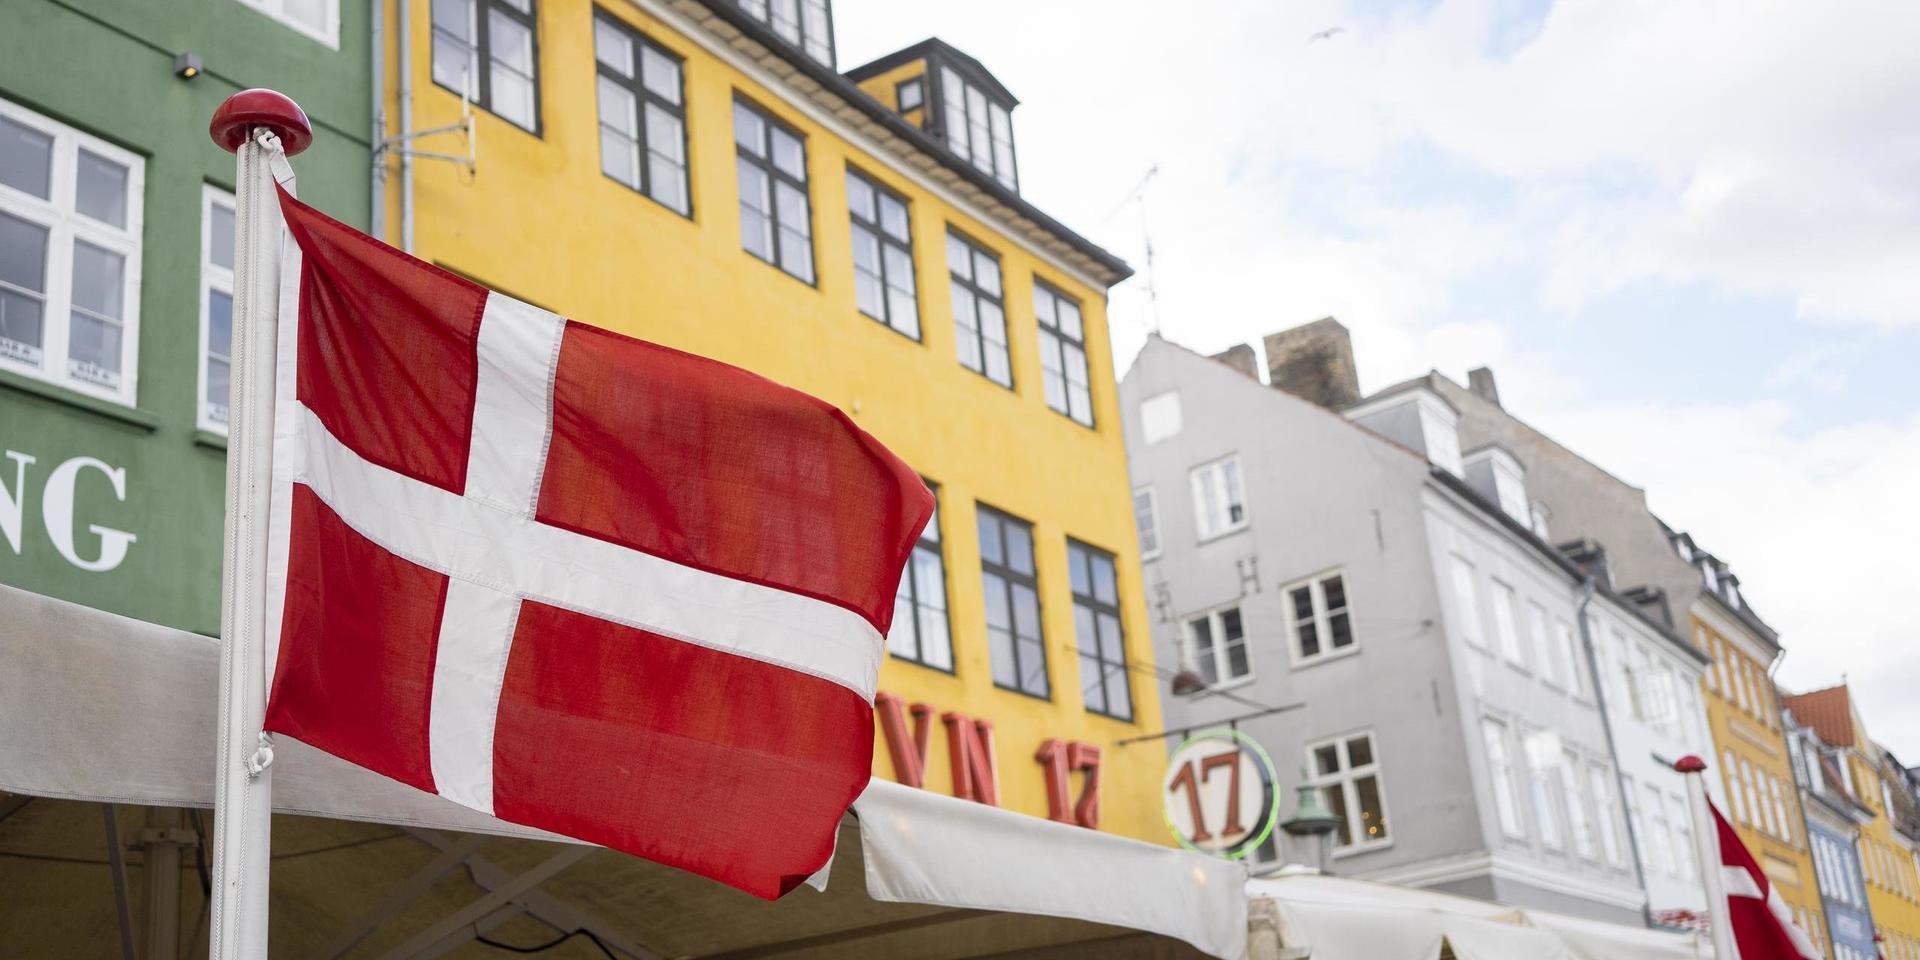 København, Danmark 20200701. Dansk flagga i Nyhavn i København sentrum.Foto: Fredrik Hagen / NTB scanpix / TT / kod  20520